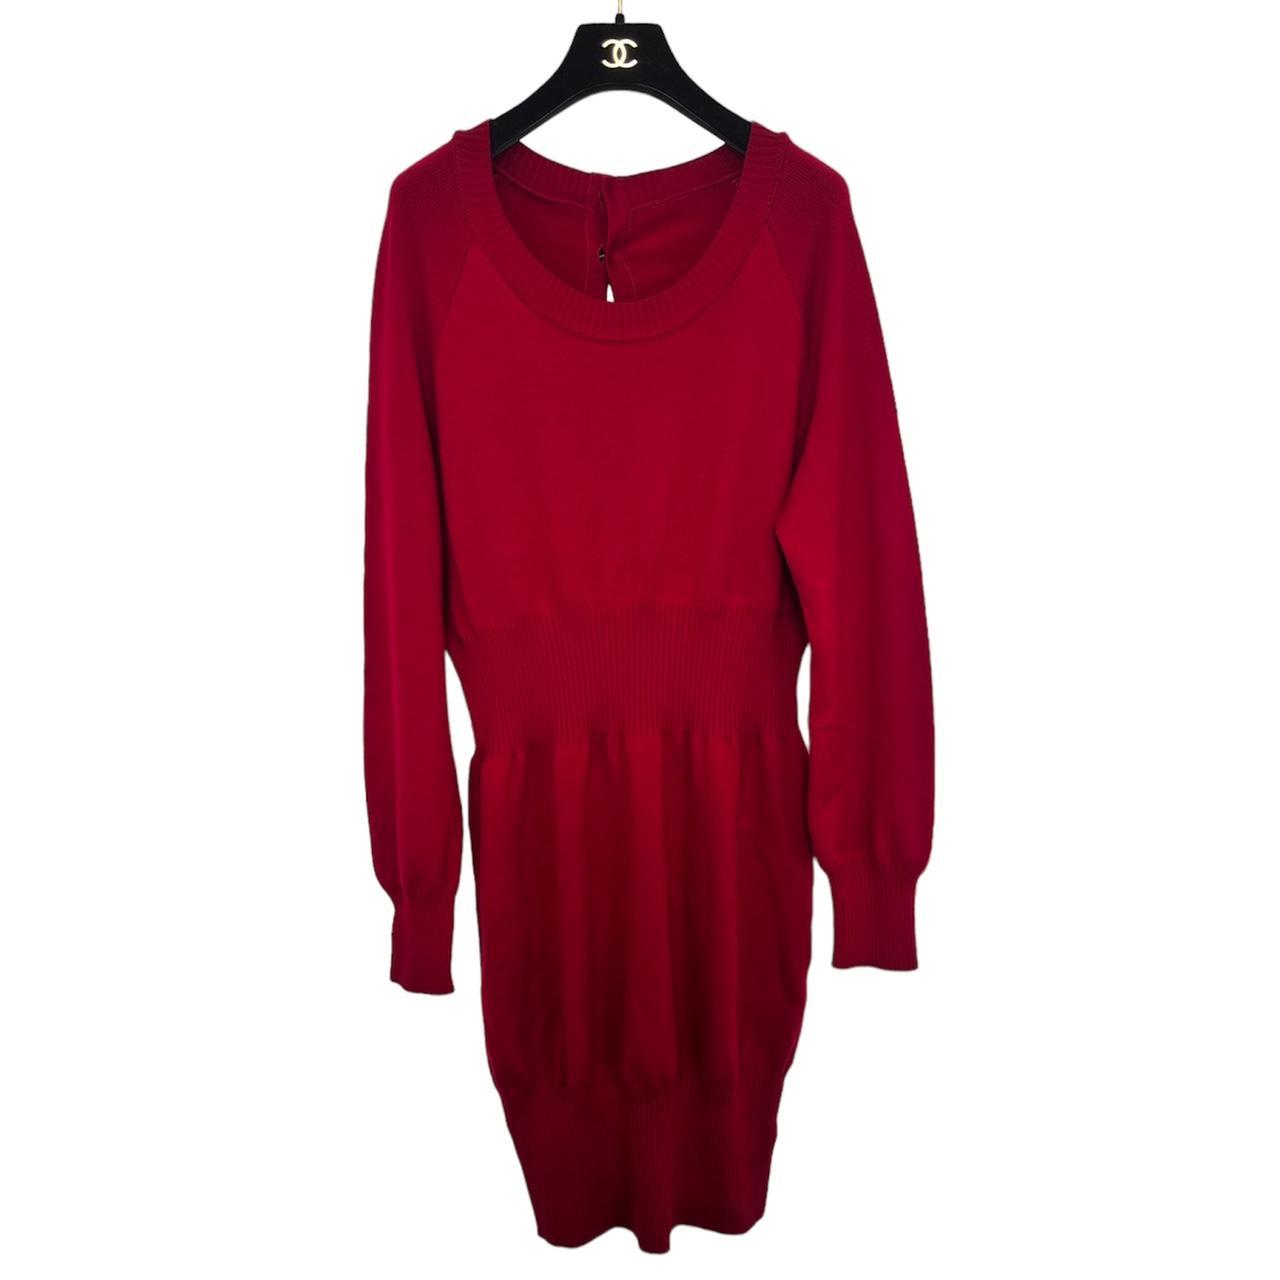 💕 Chanel Knit Knitted Long Sleeve Wool Red Dress... - Depop